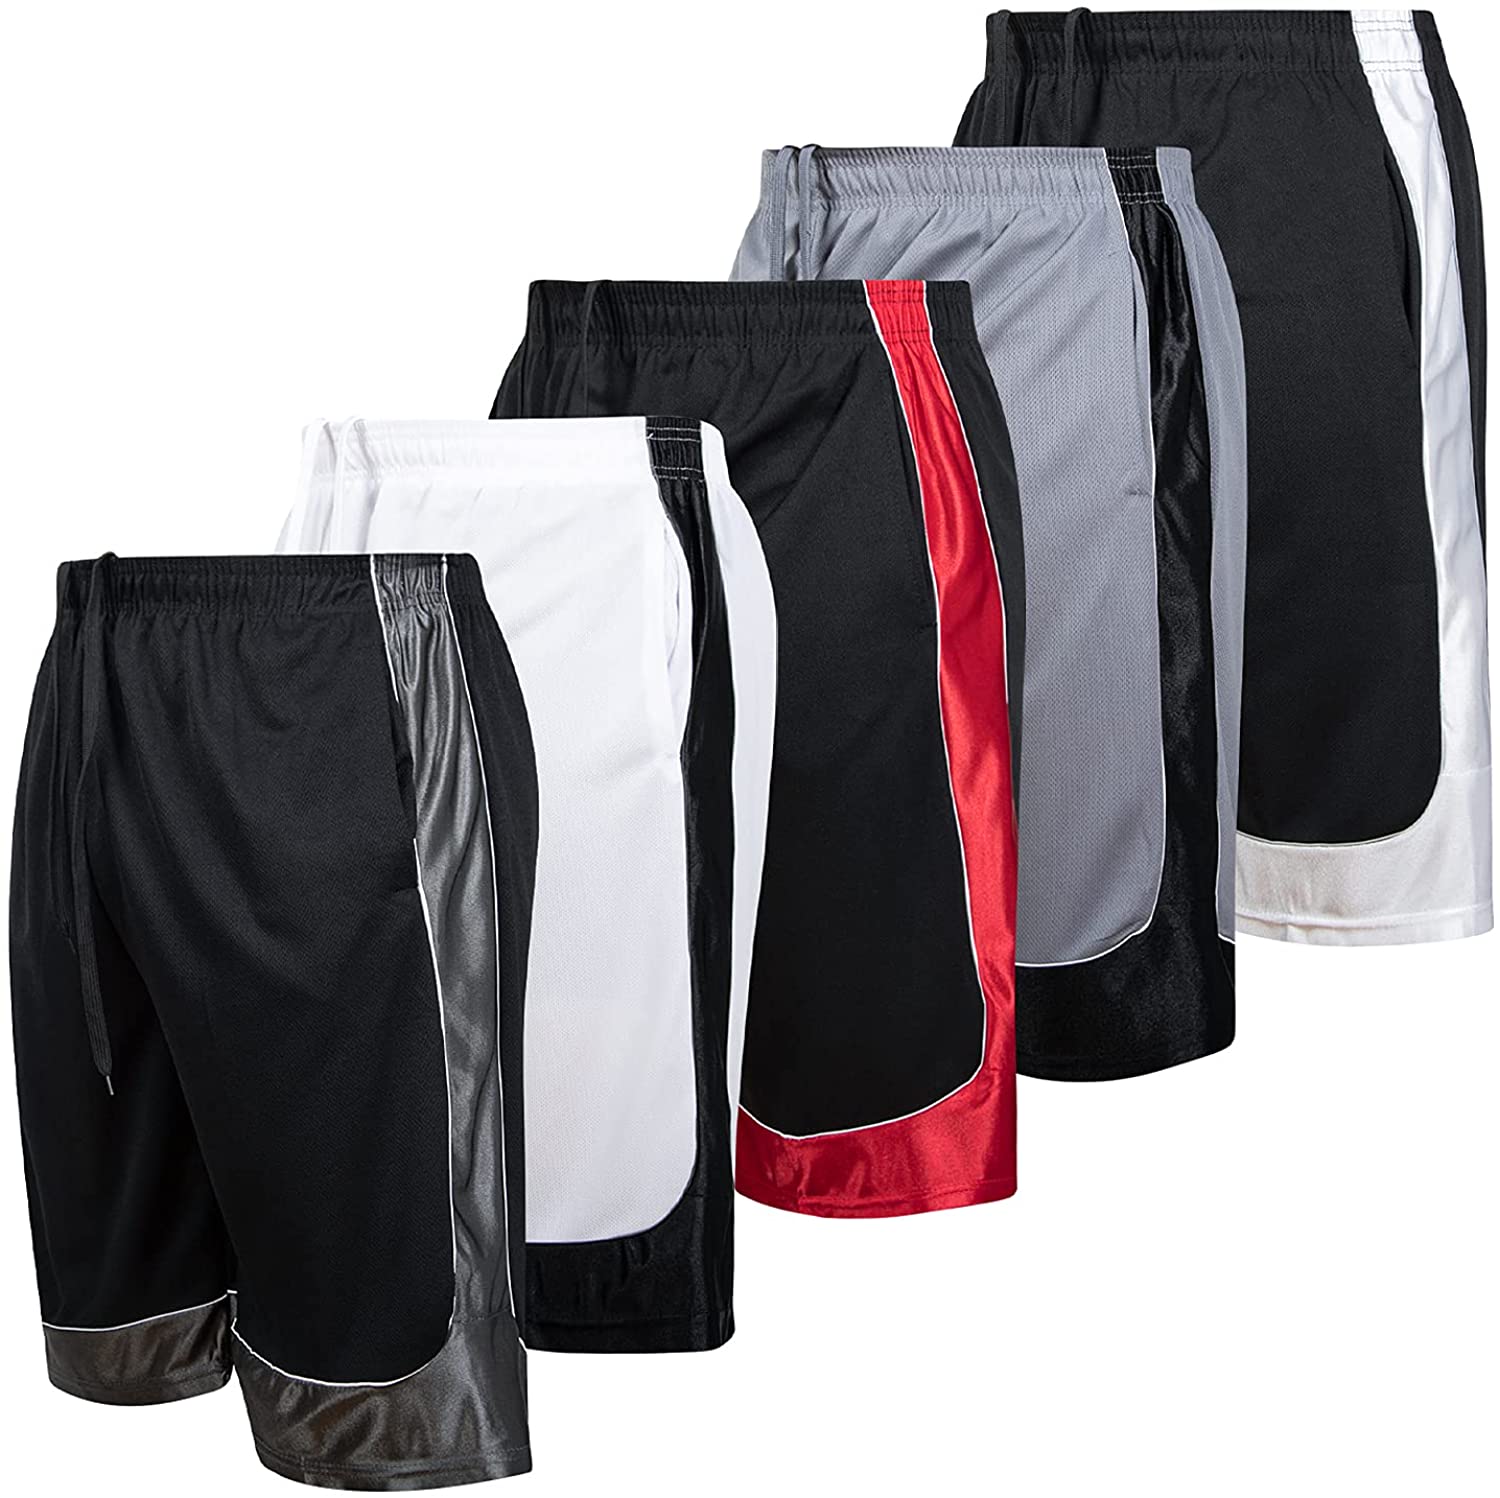 Men's Athletic & Workout Shorts, Performance Shorts